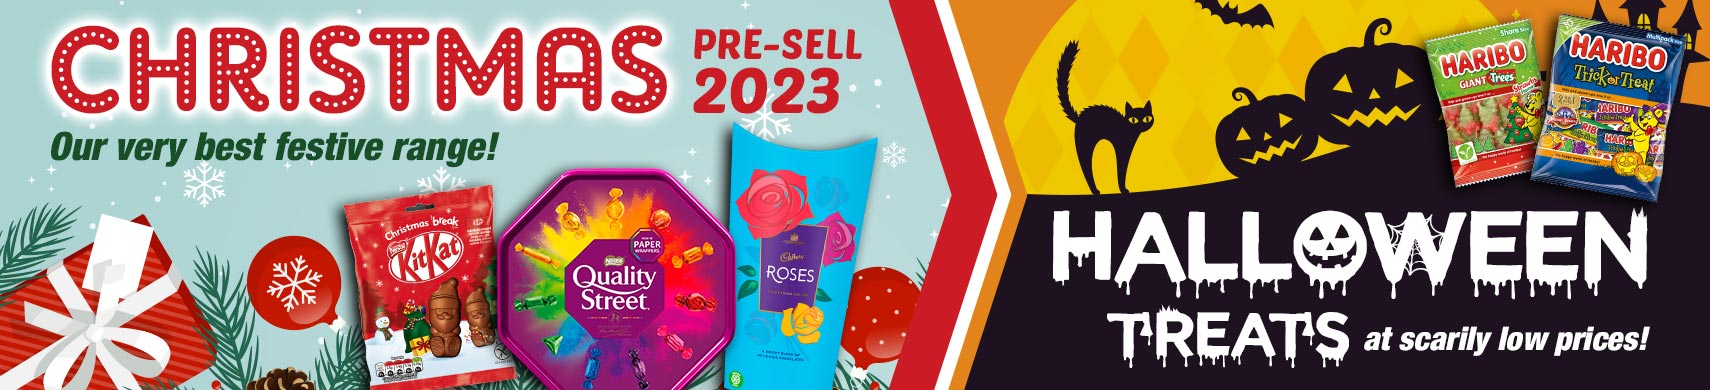 Christmas Pre-sell 2023, including Halloween